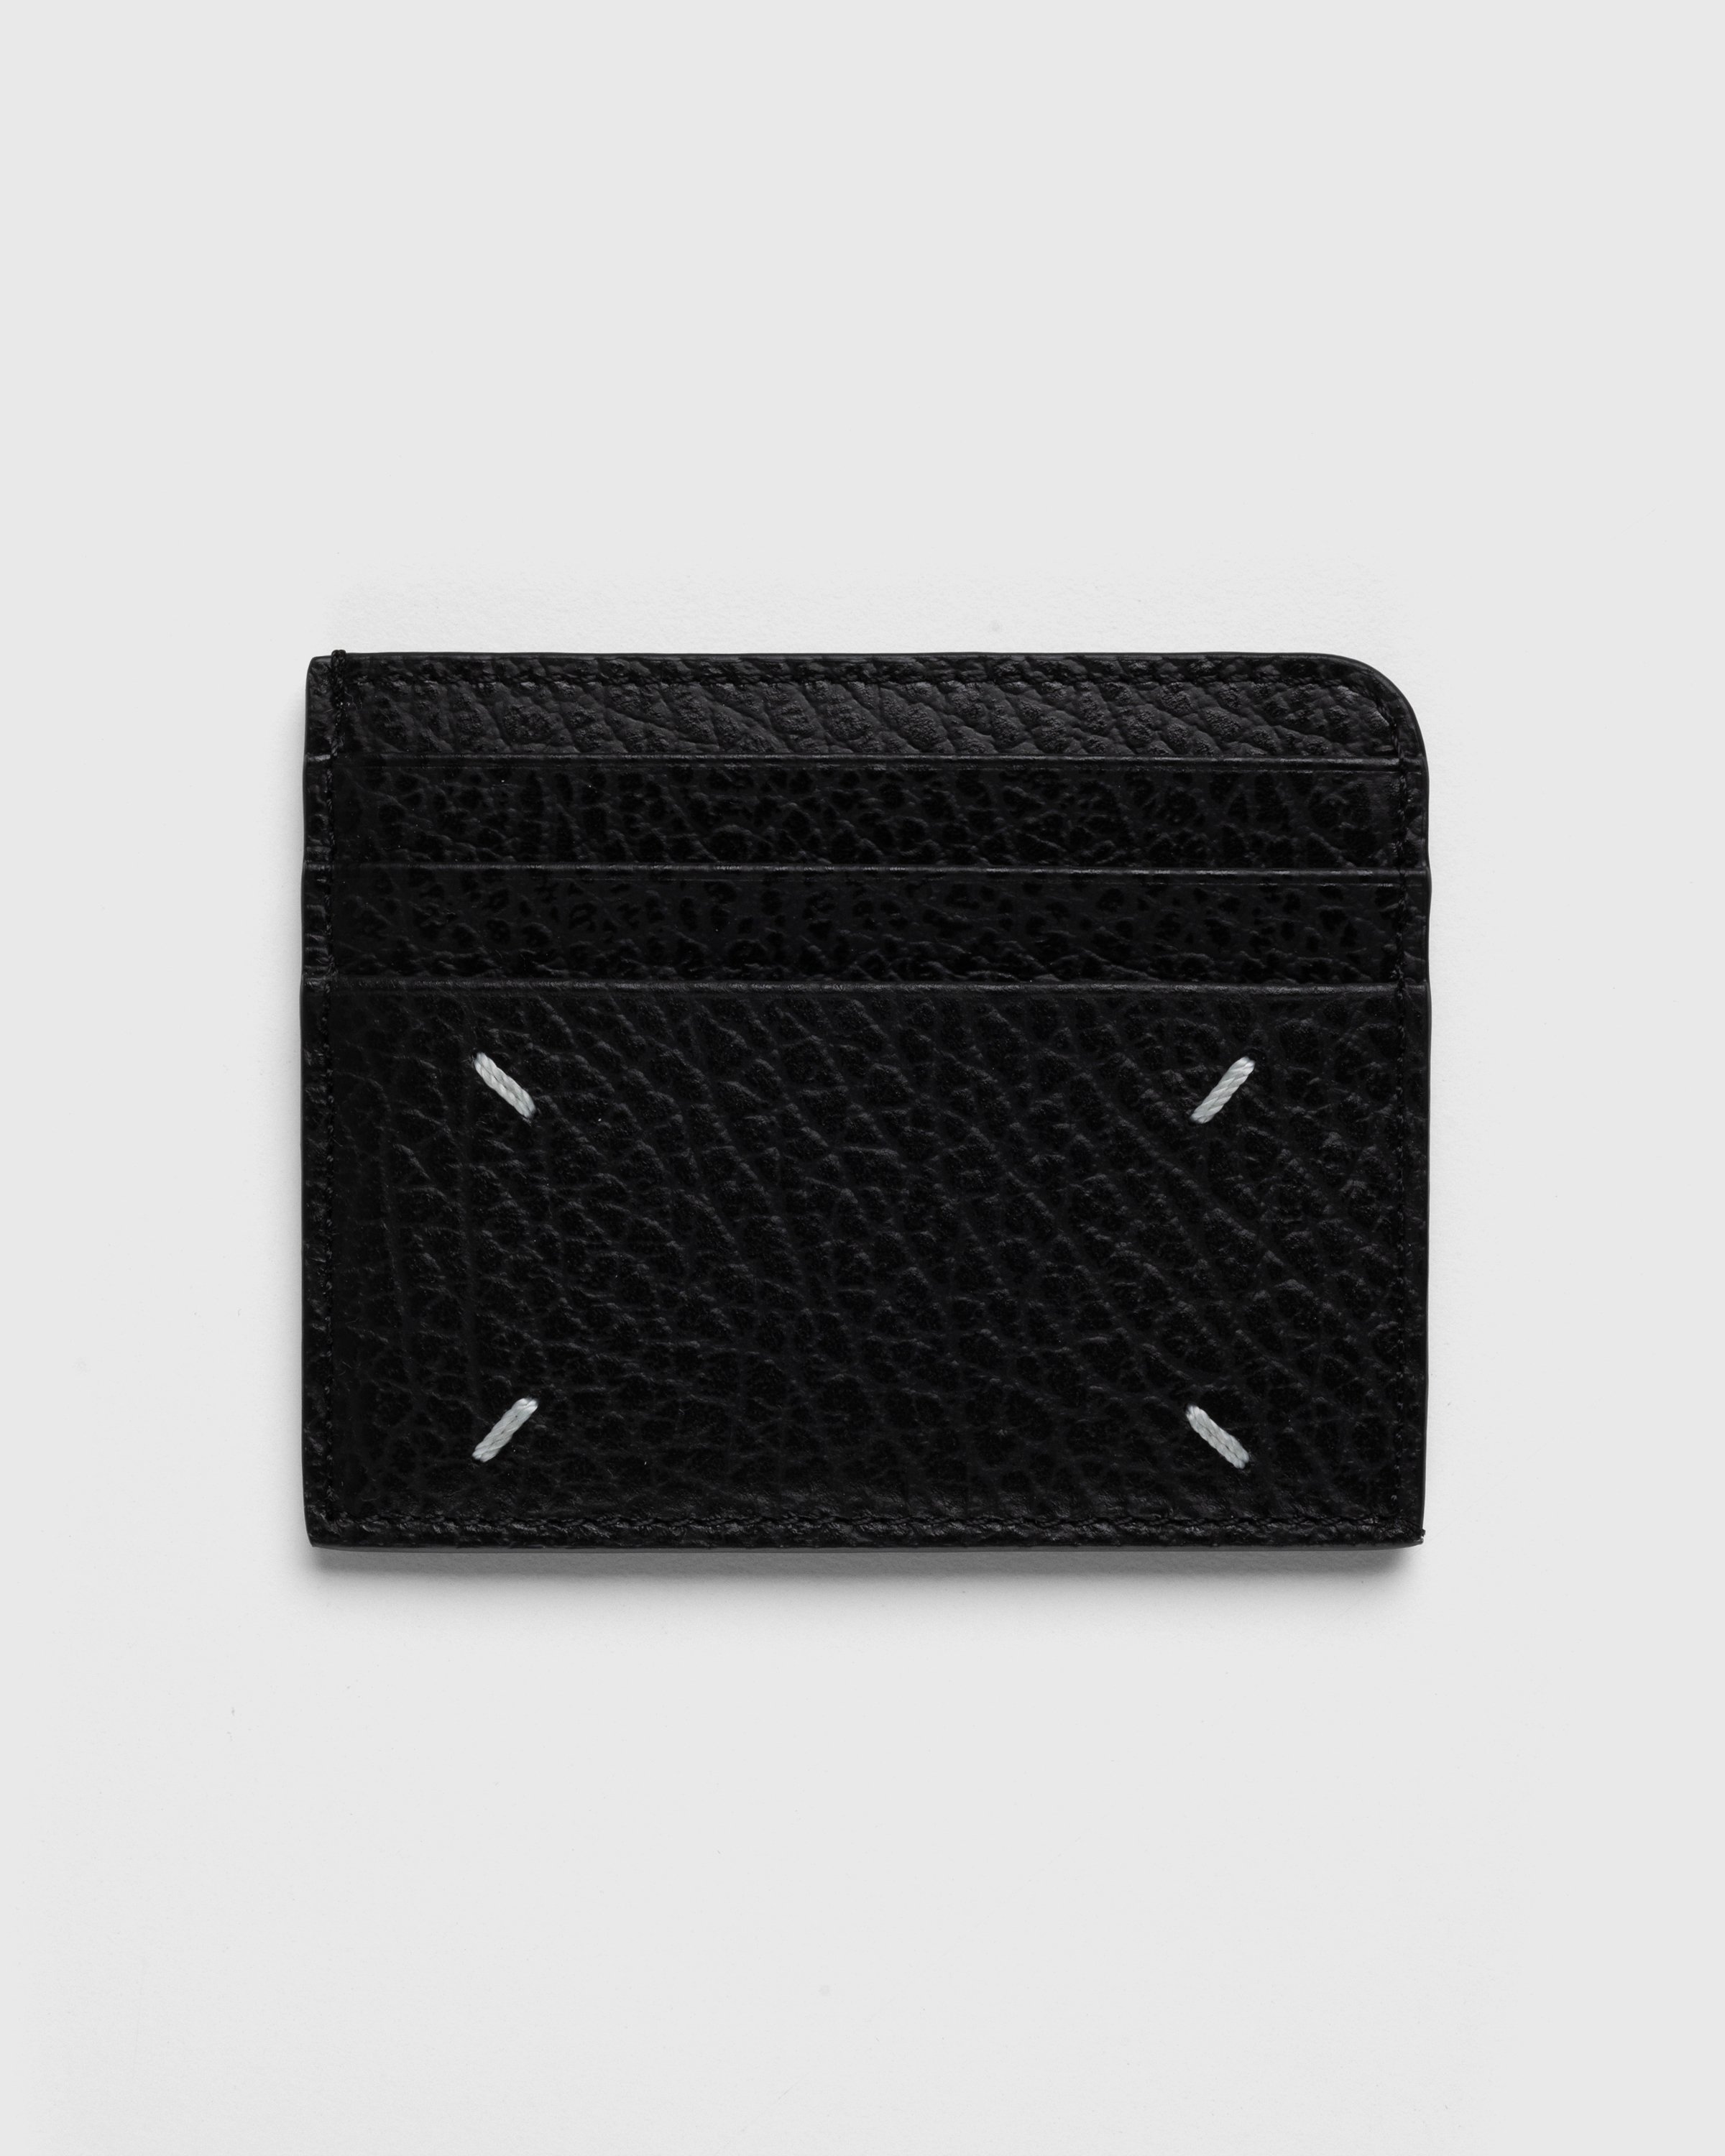 Maison Margiela - Leather Card Holder Black - Accessories - Black - Image 1